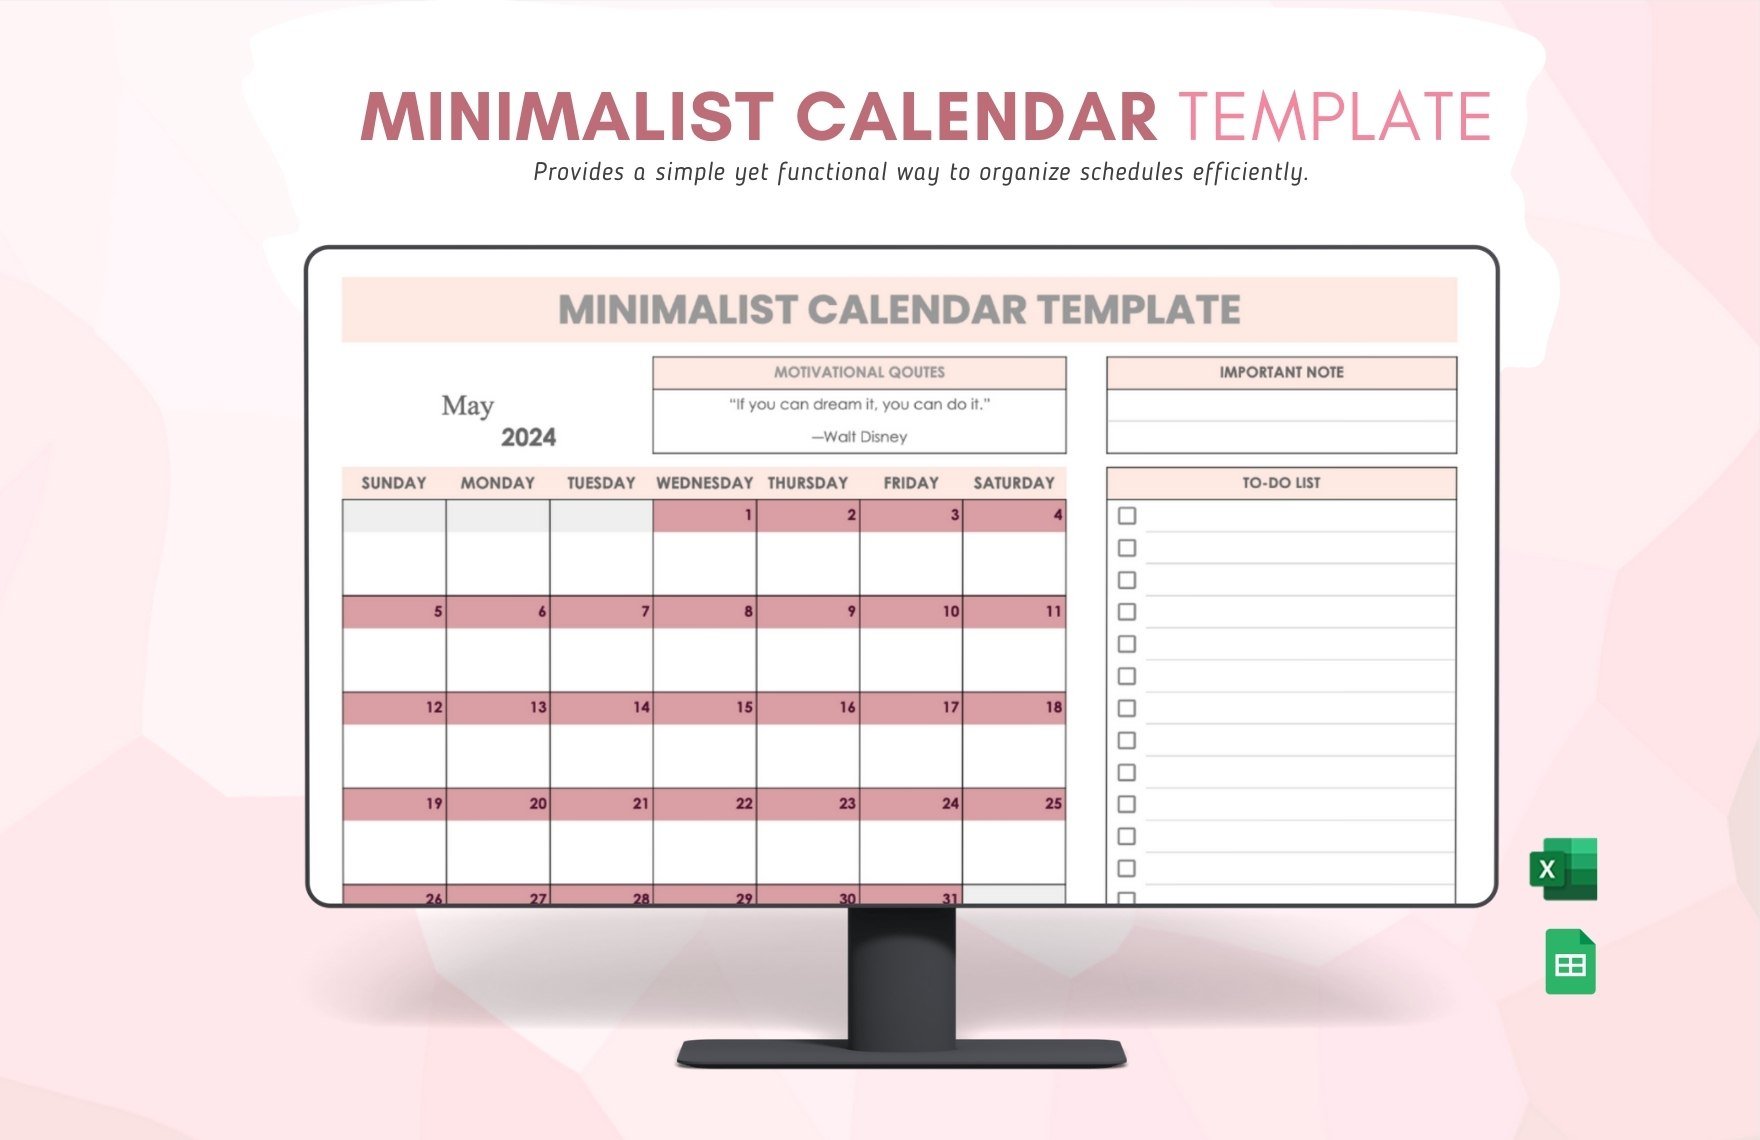 Minimalist Calendar Template in Excel, Google Sheets